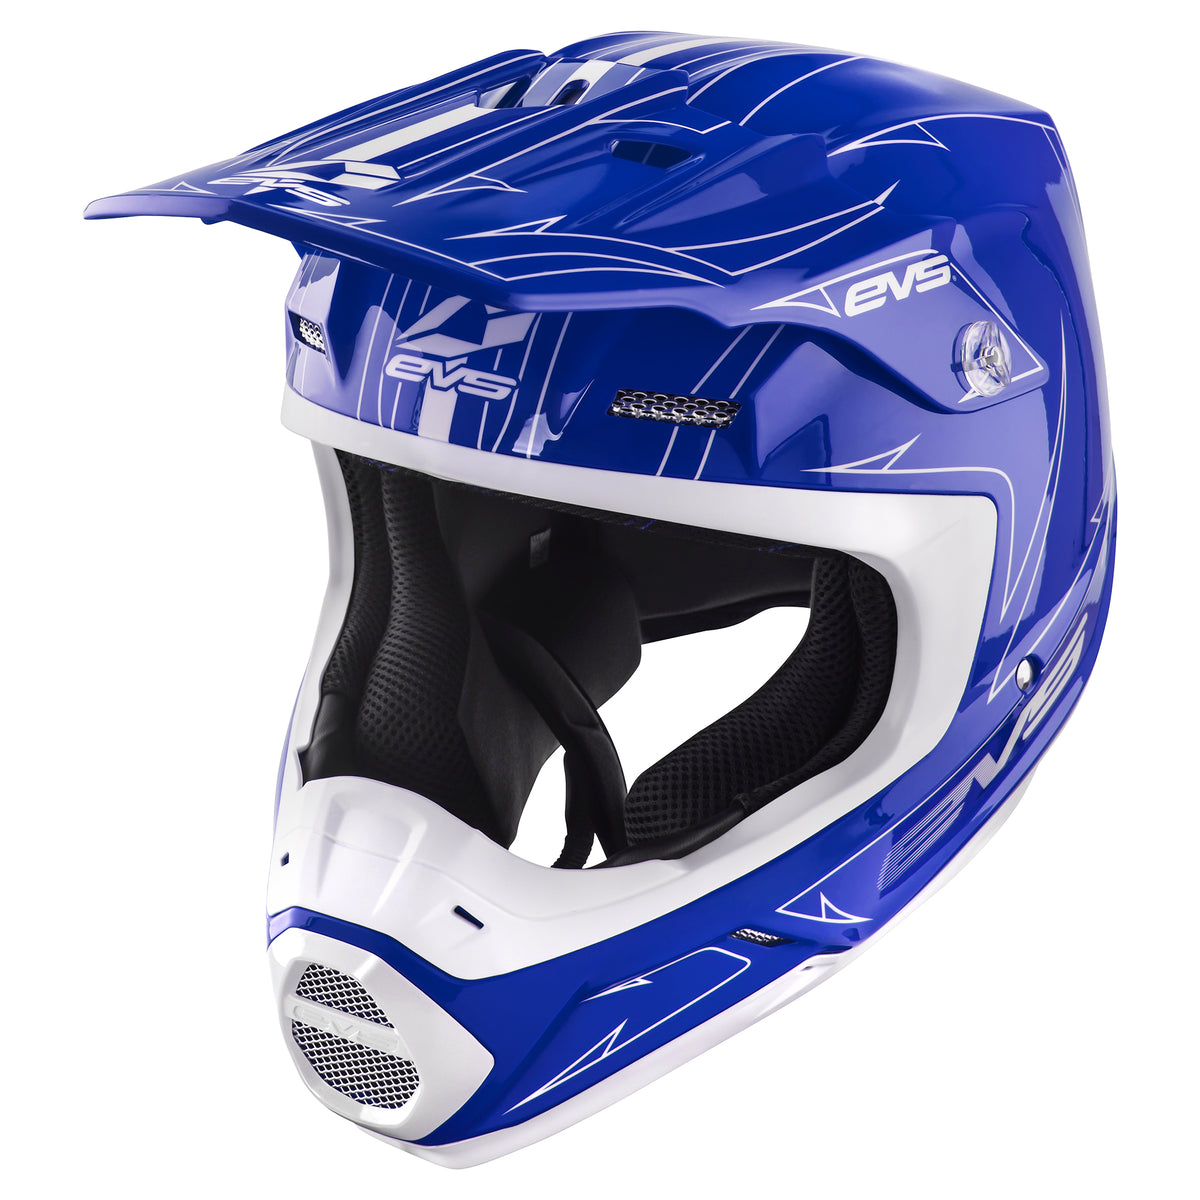 T5 Helmet - Pinner Blue - EVS Sports